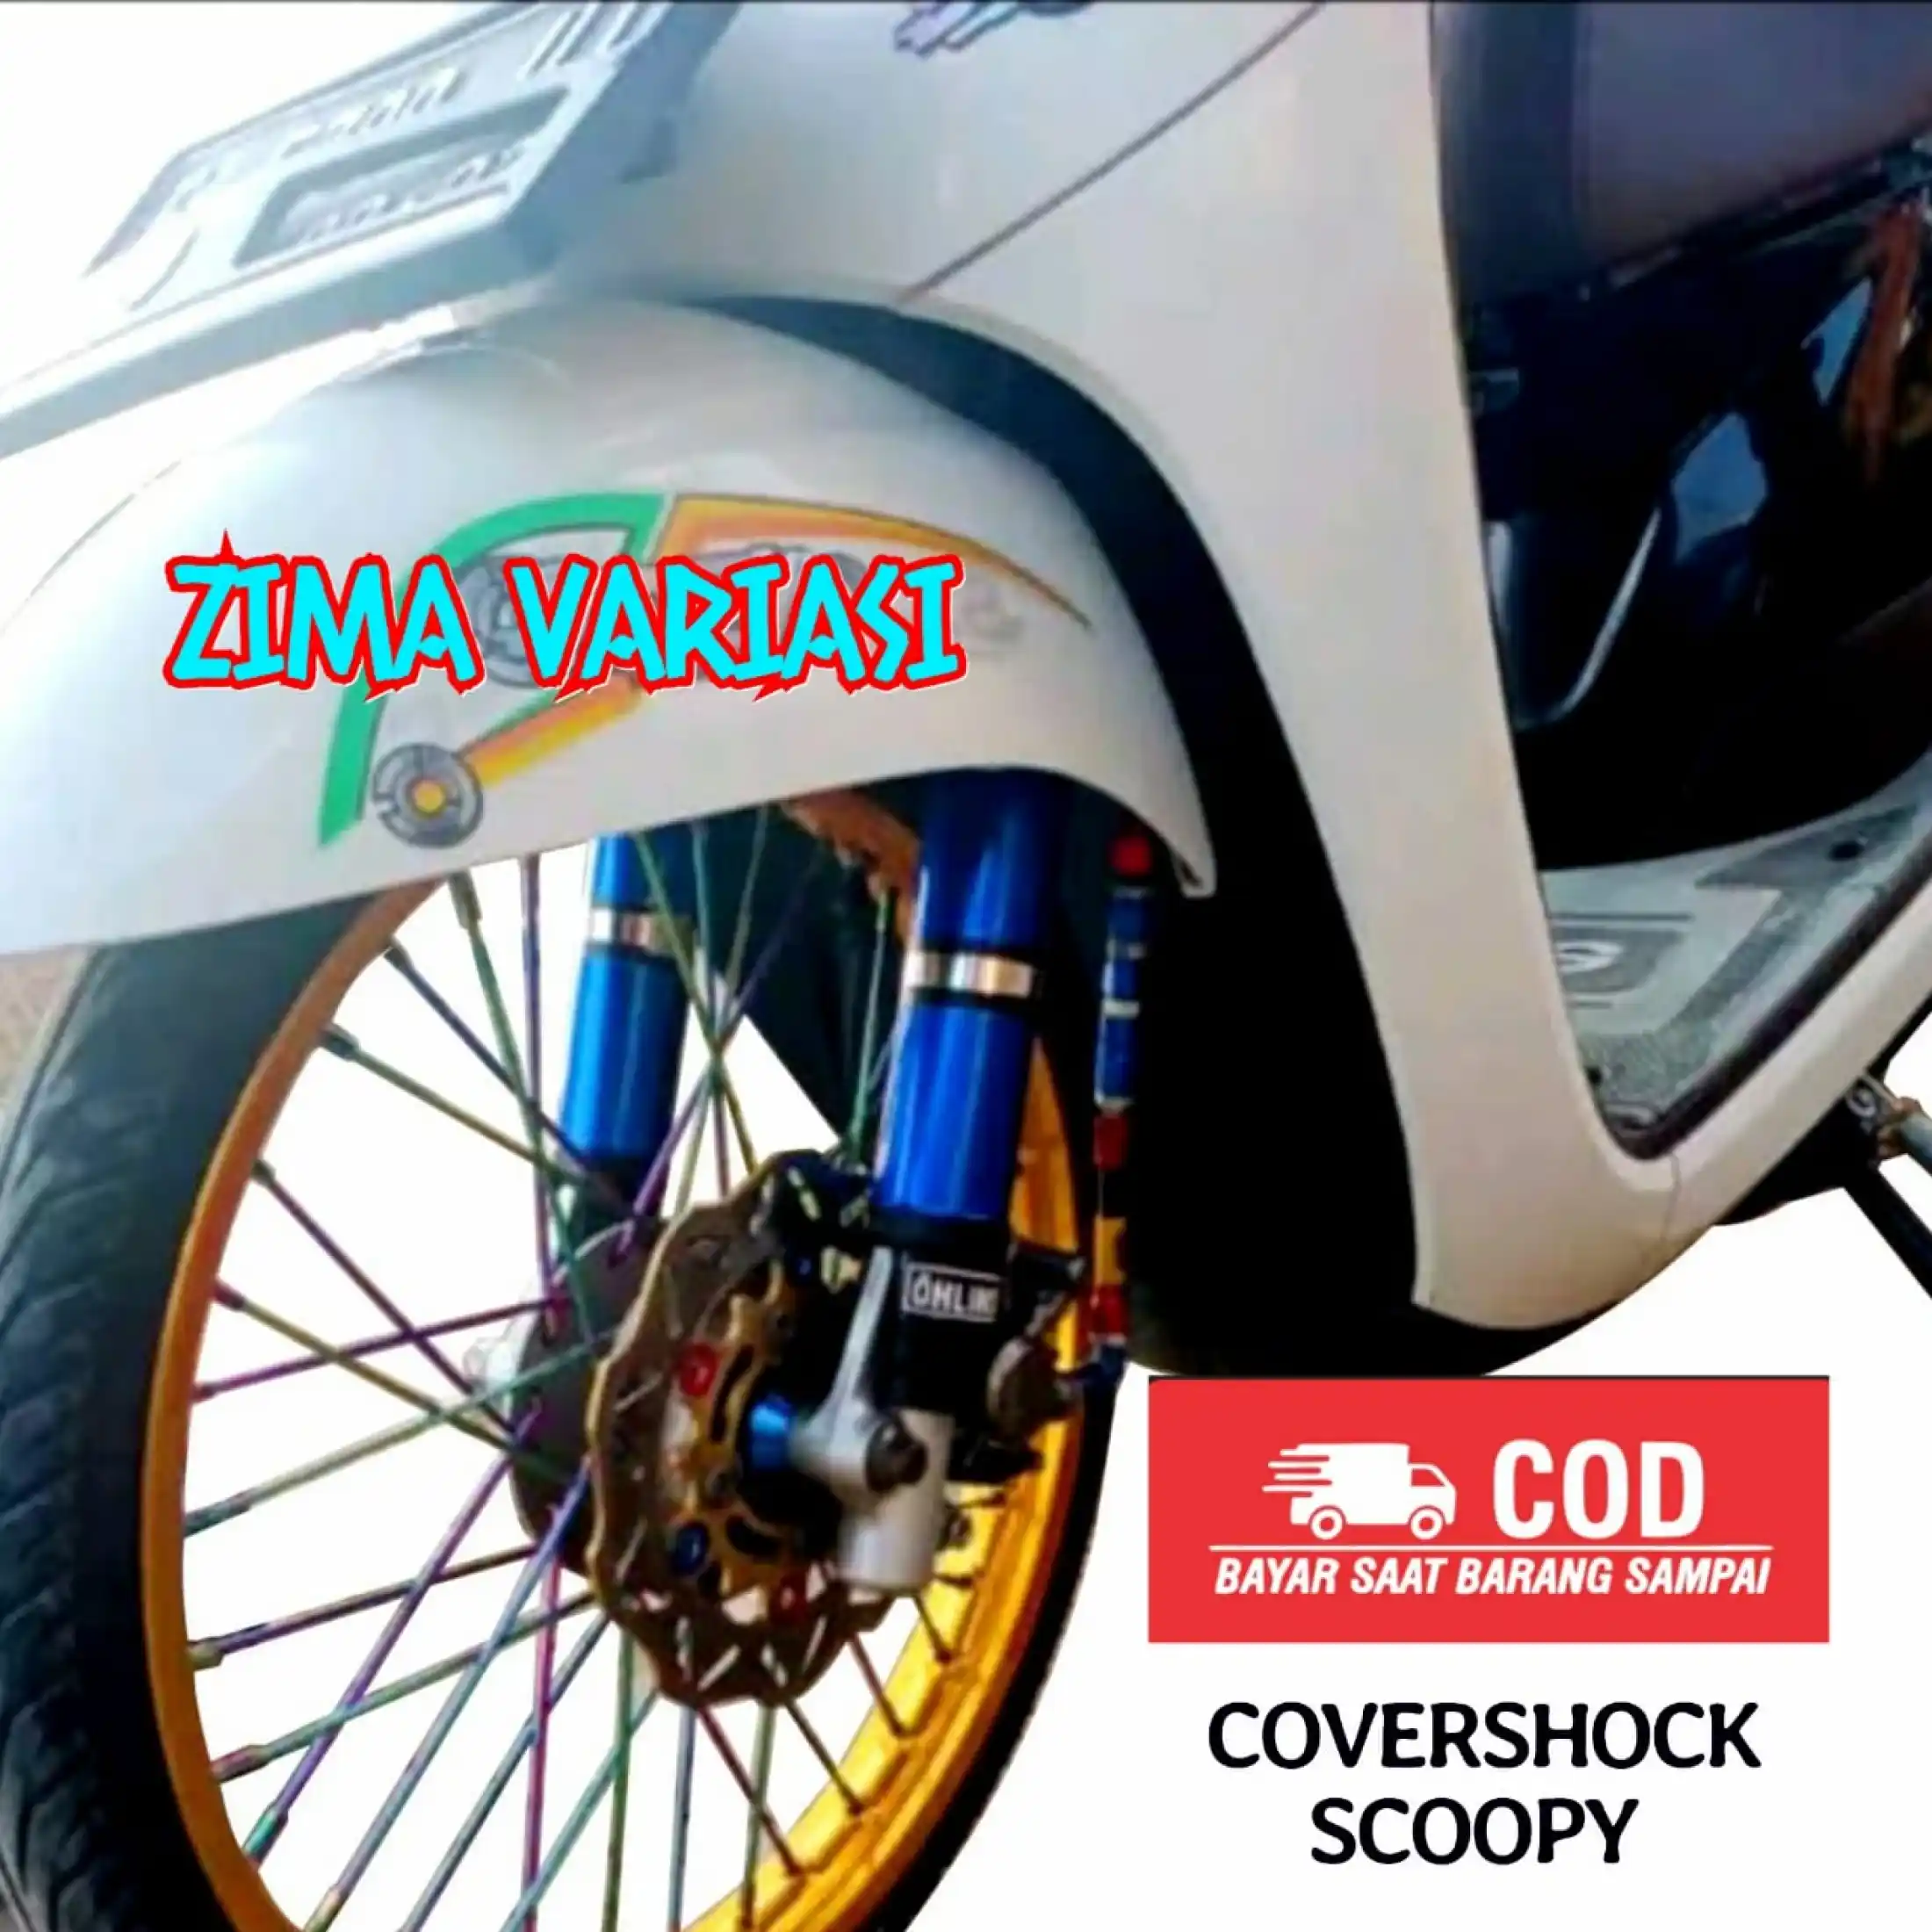 Covershock Motor SCOOPY Modifikasi Motor SCOOPY Variasi SCOOPY Lazada Indonesia